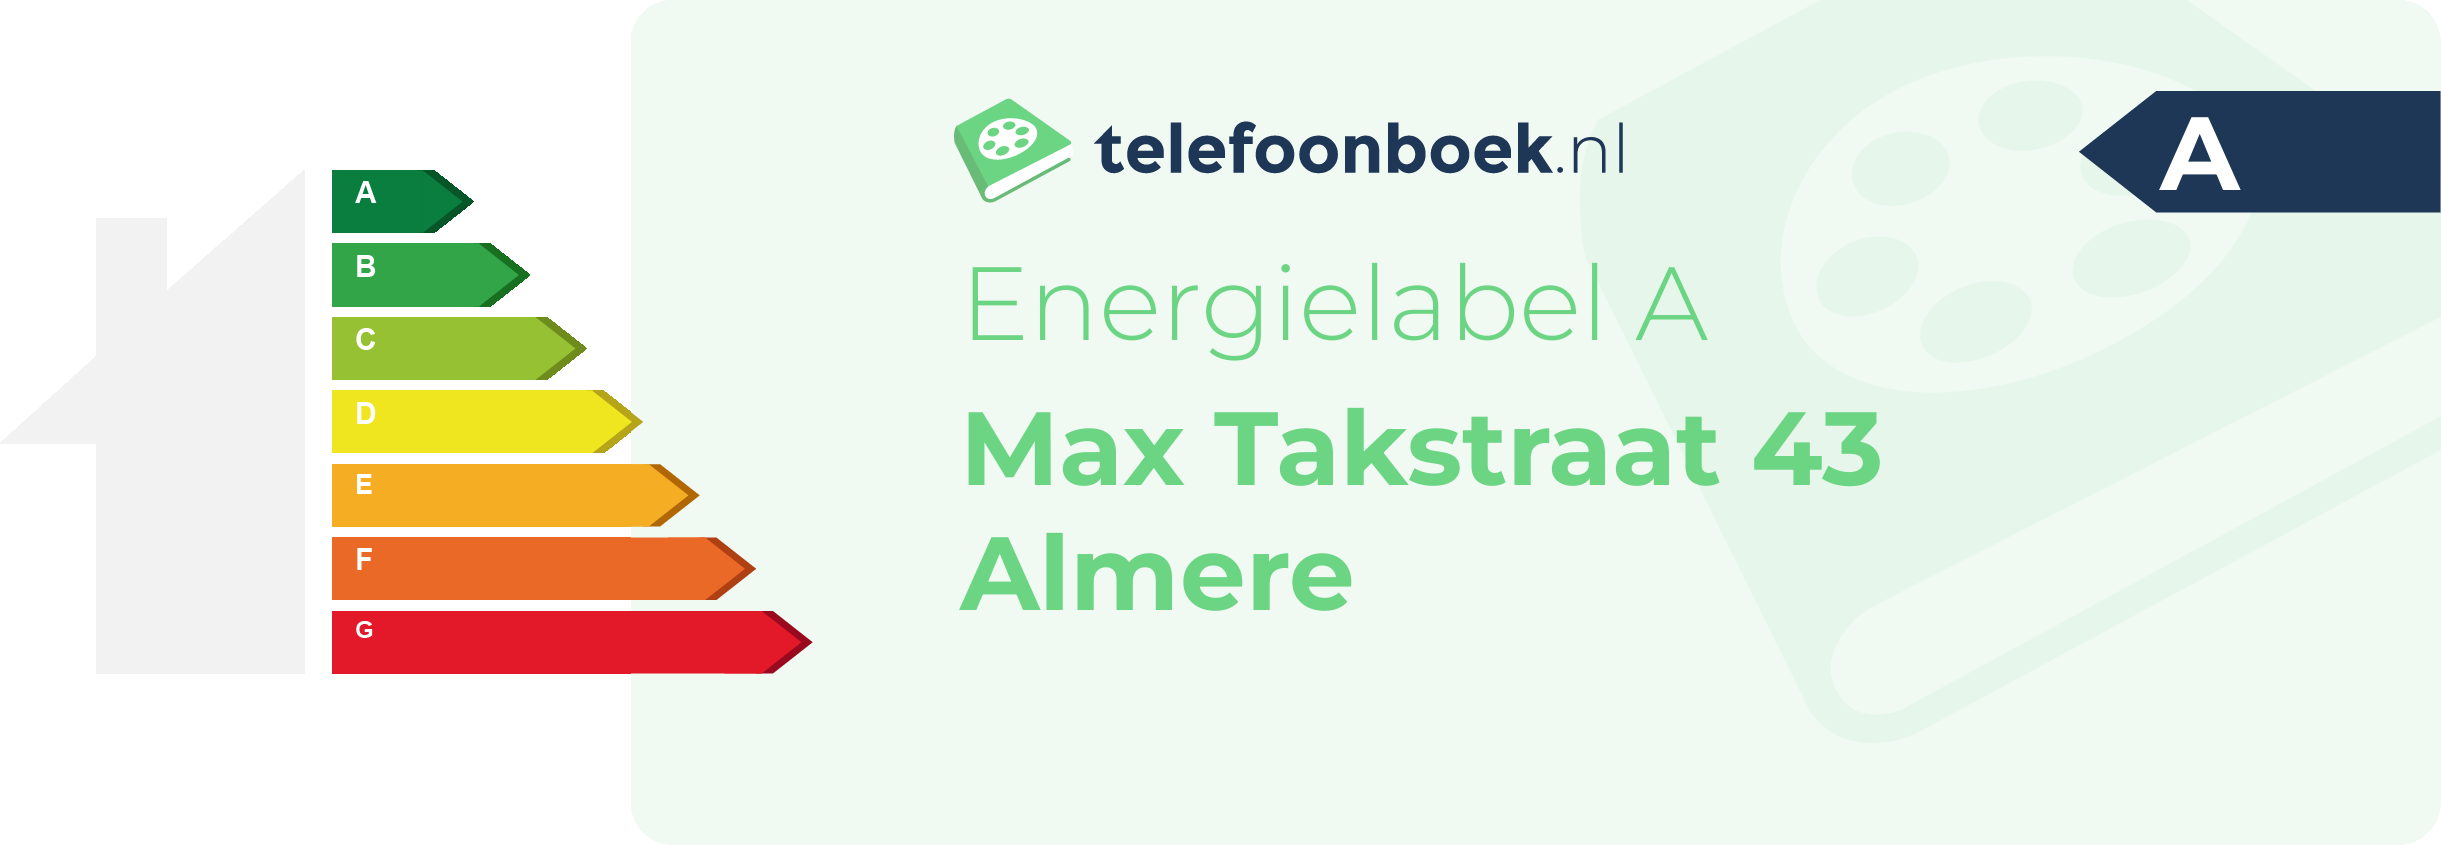 Energielabel Max Takstraat 43 Almere